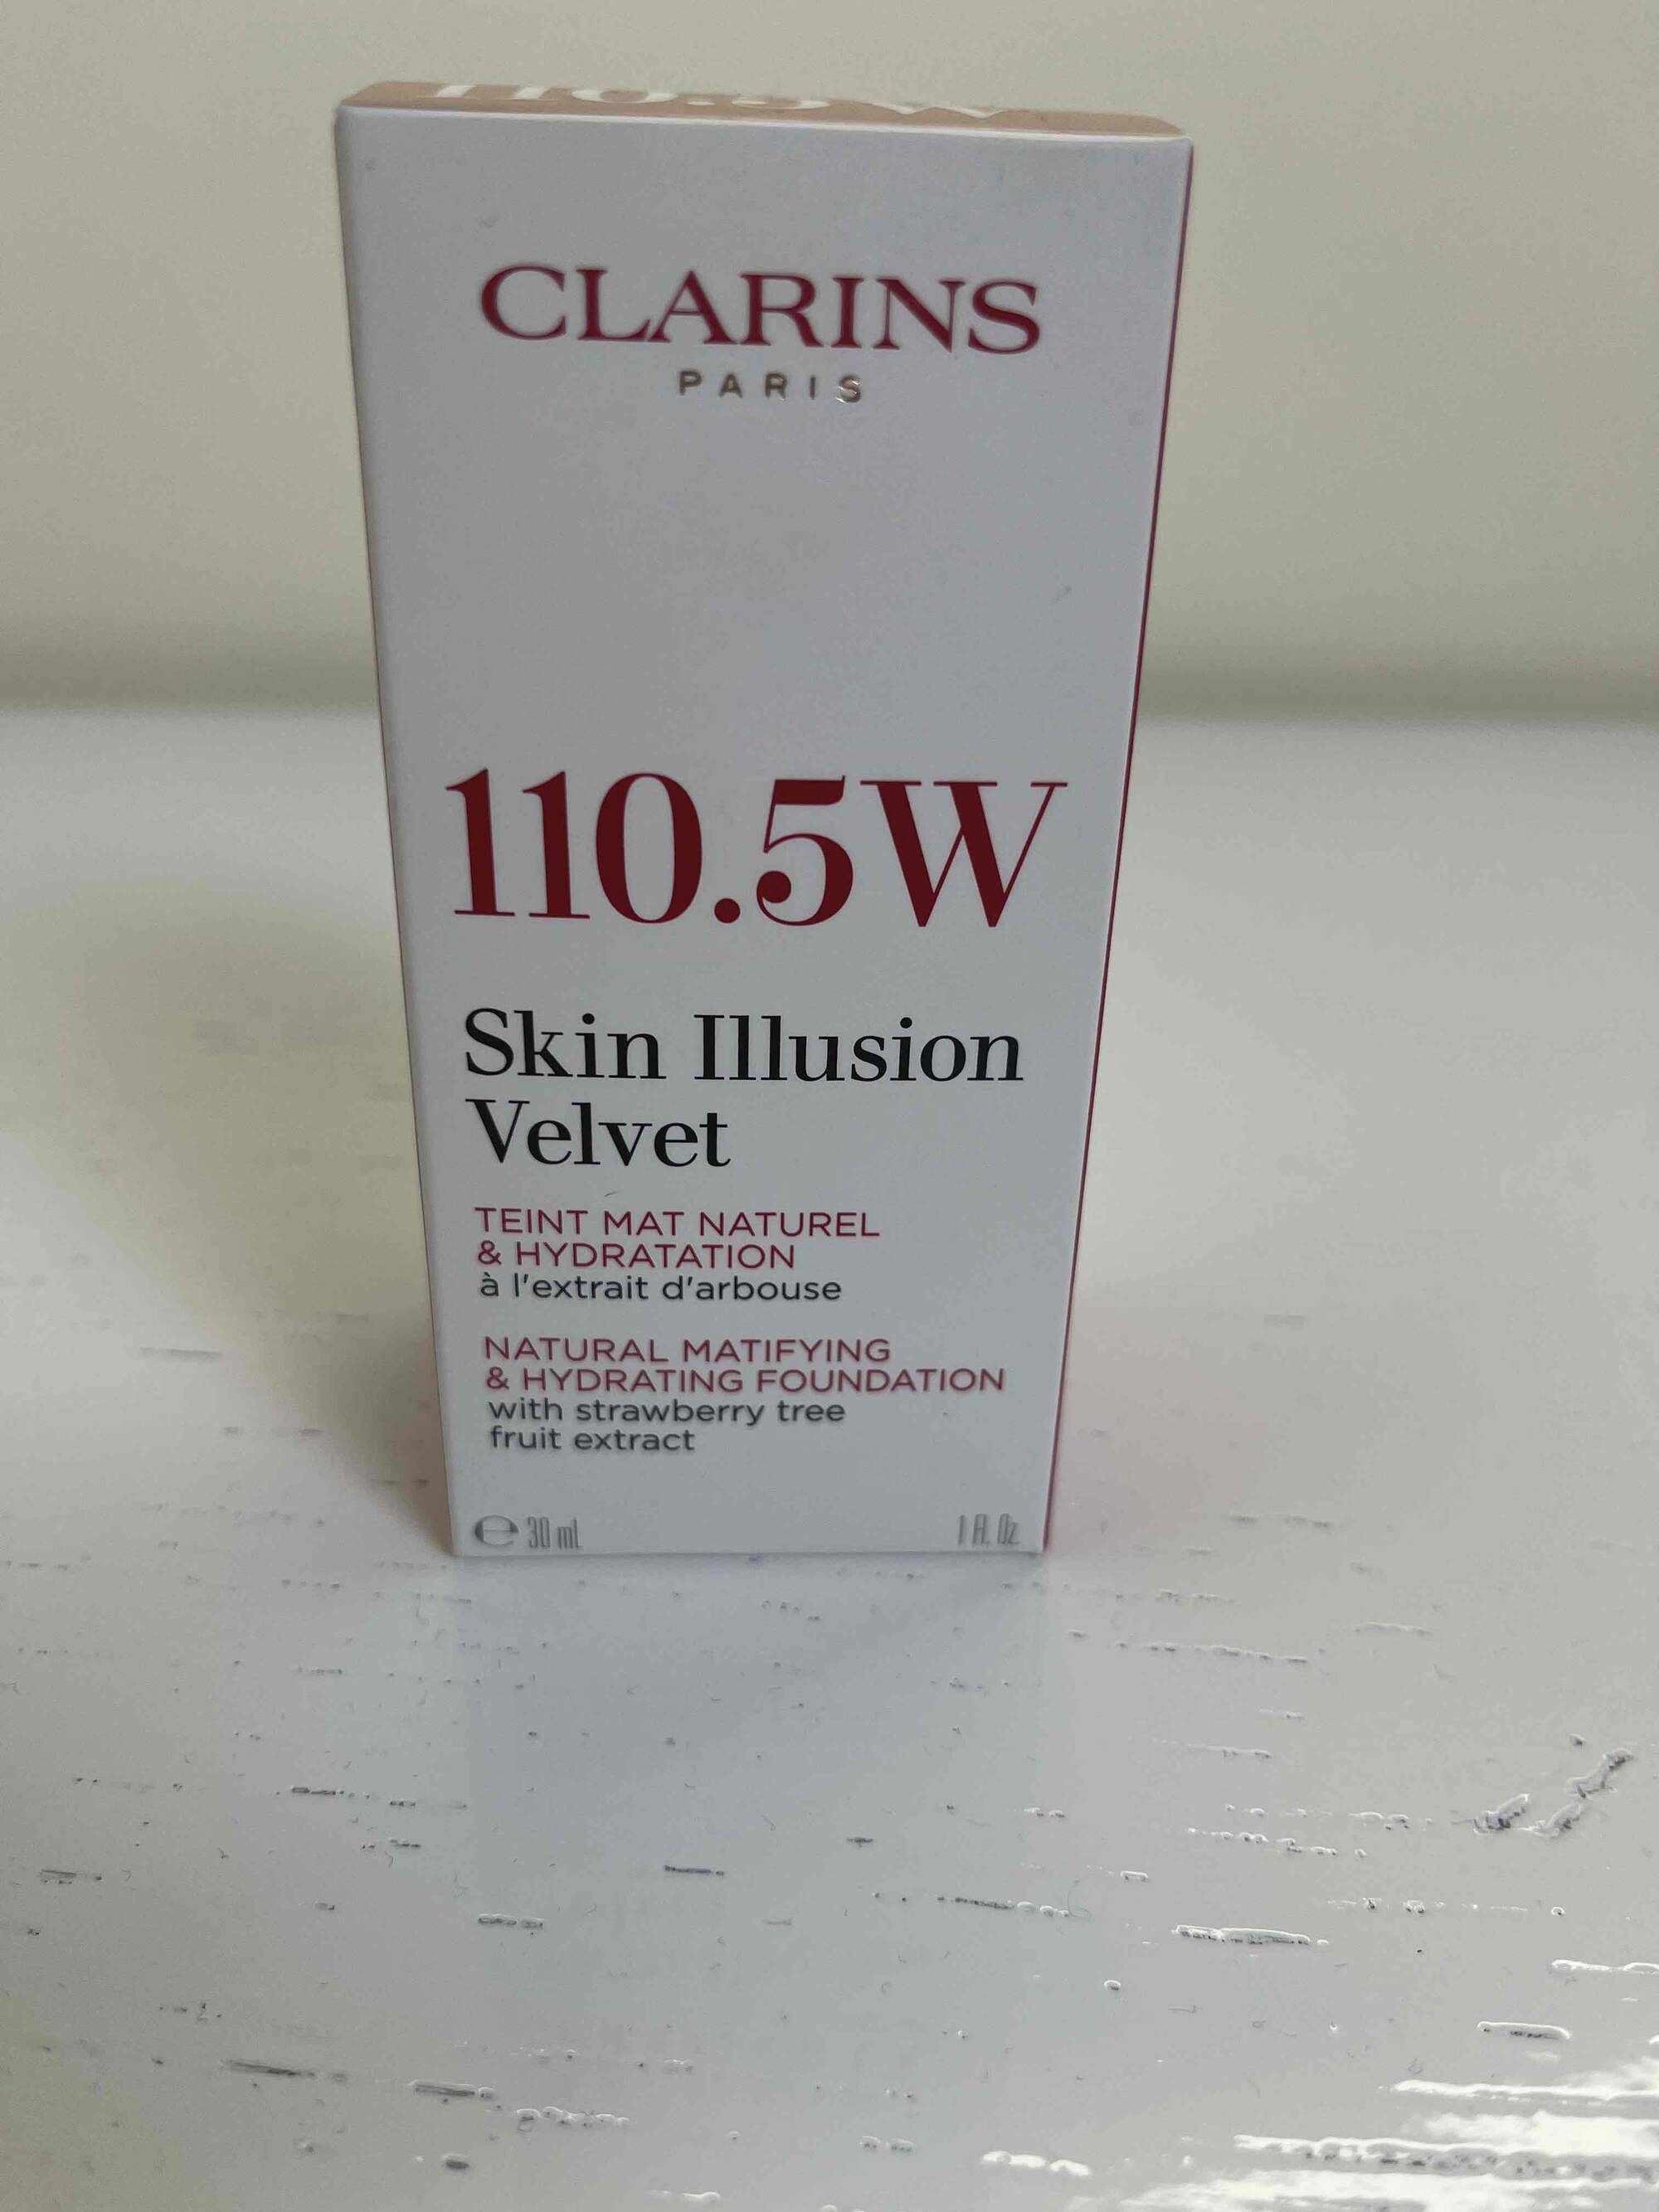 CLARINS - Skin illusion velvet 110.5W - Teint mat naturel & hydratation